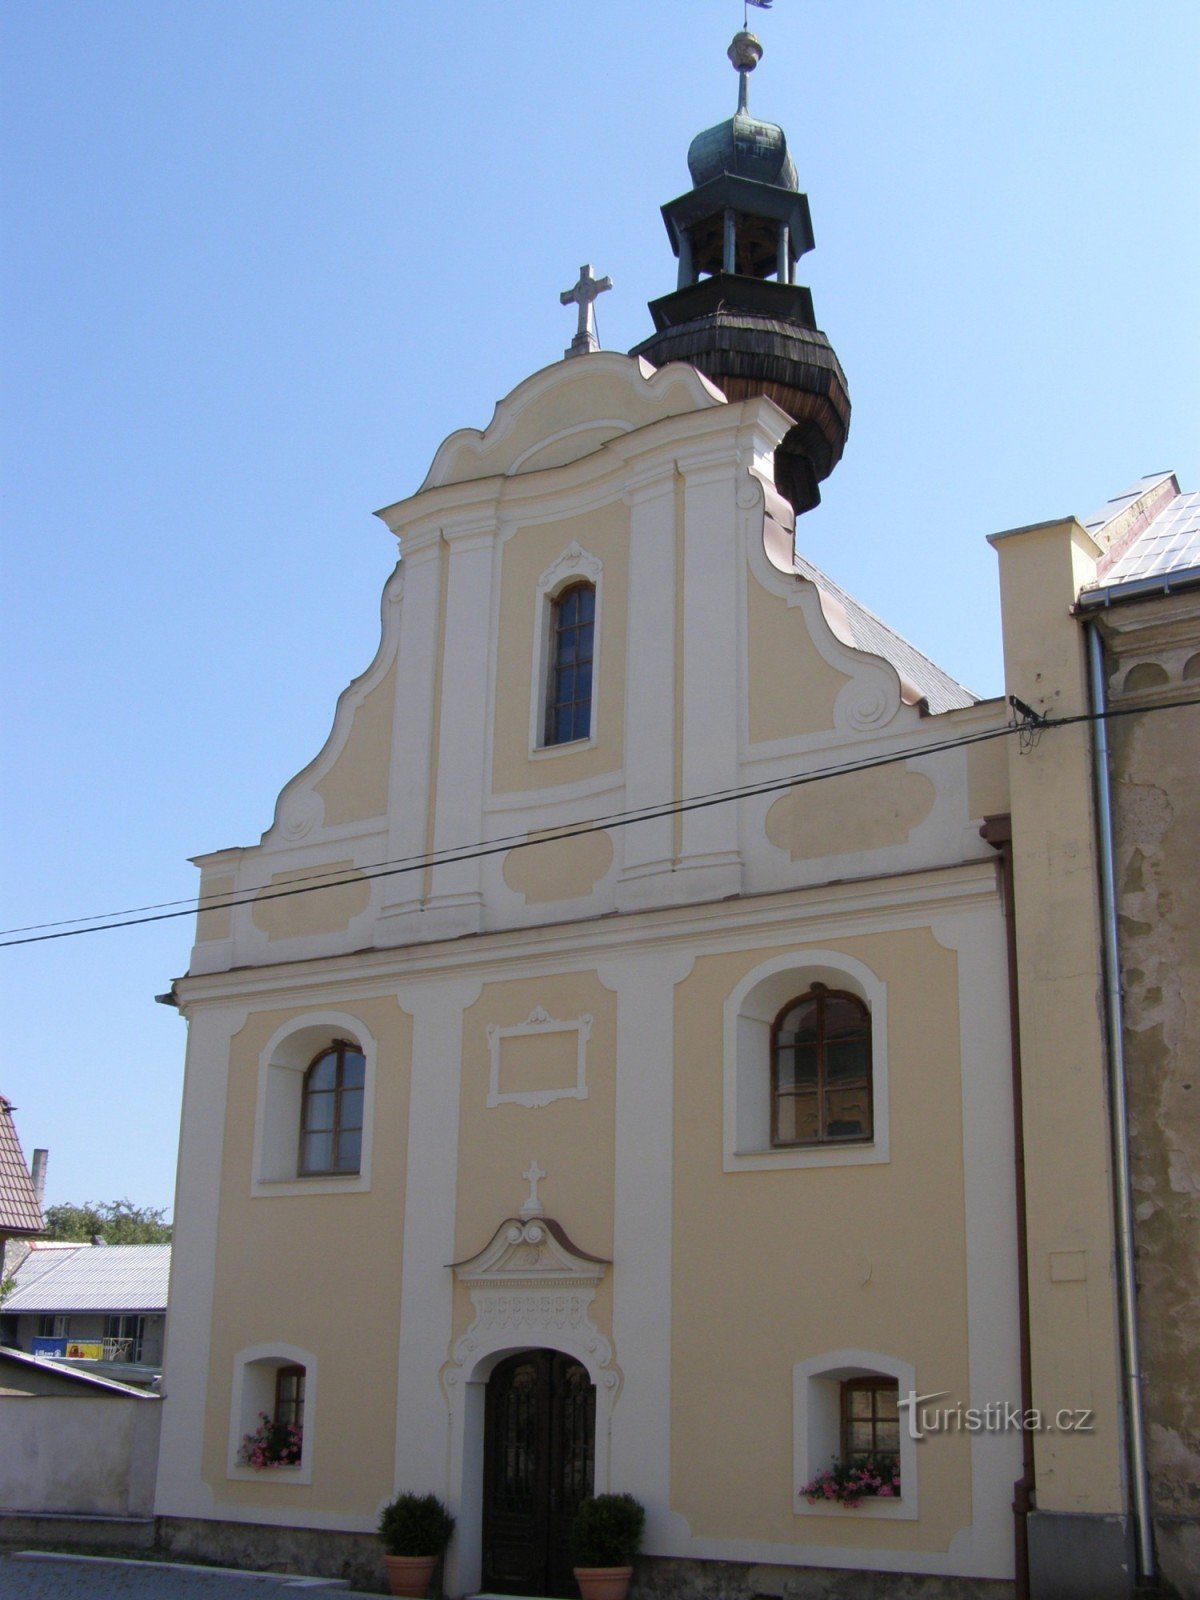 Zlaté Hory - hospital church of St. Crisis